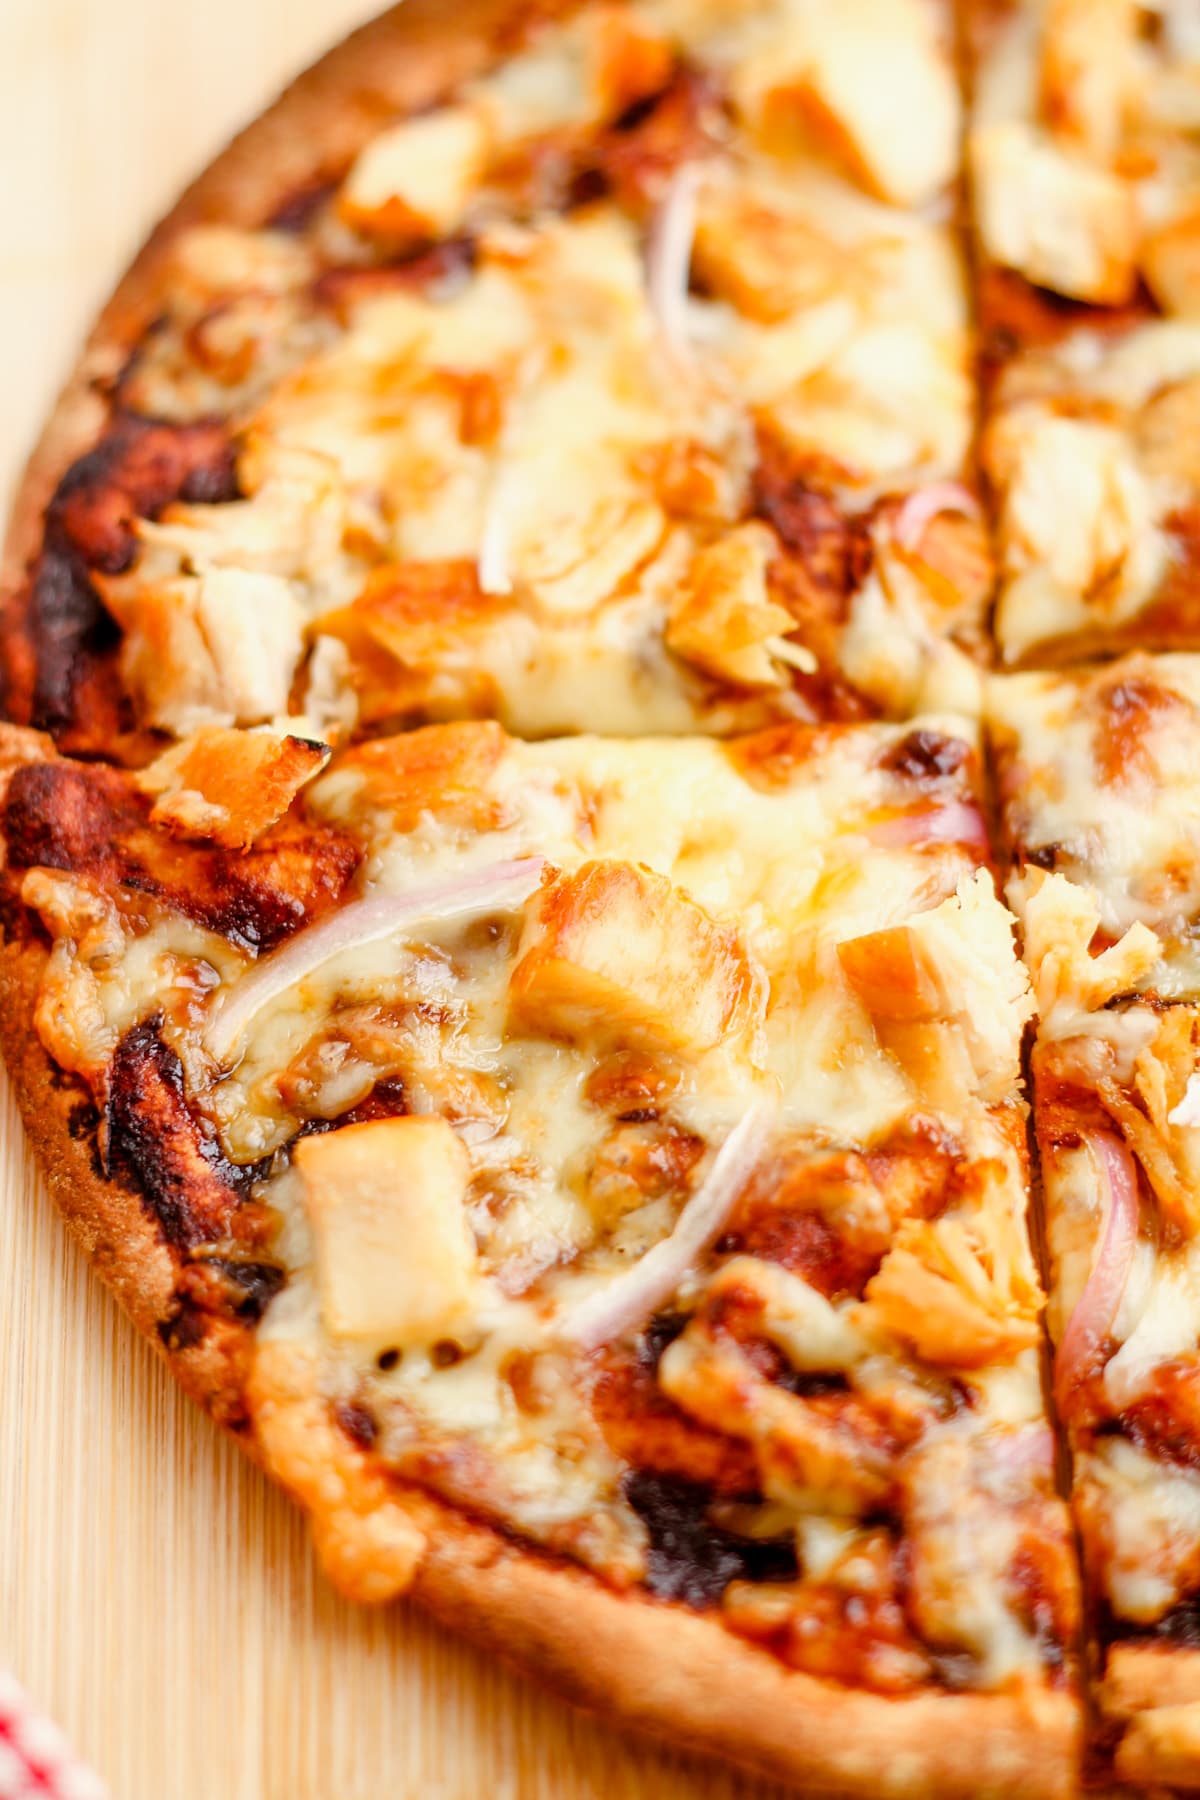 Pita pizza on a cutting board.